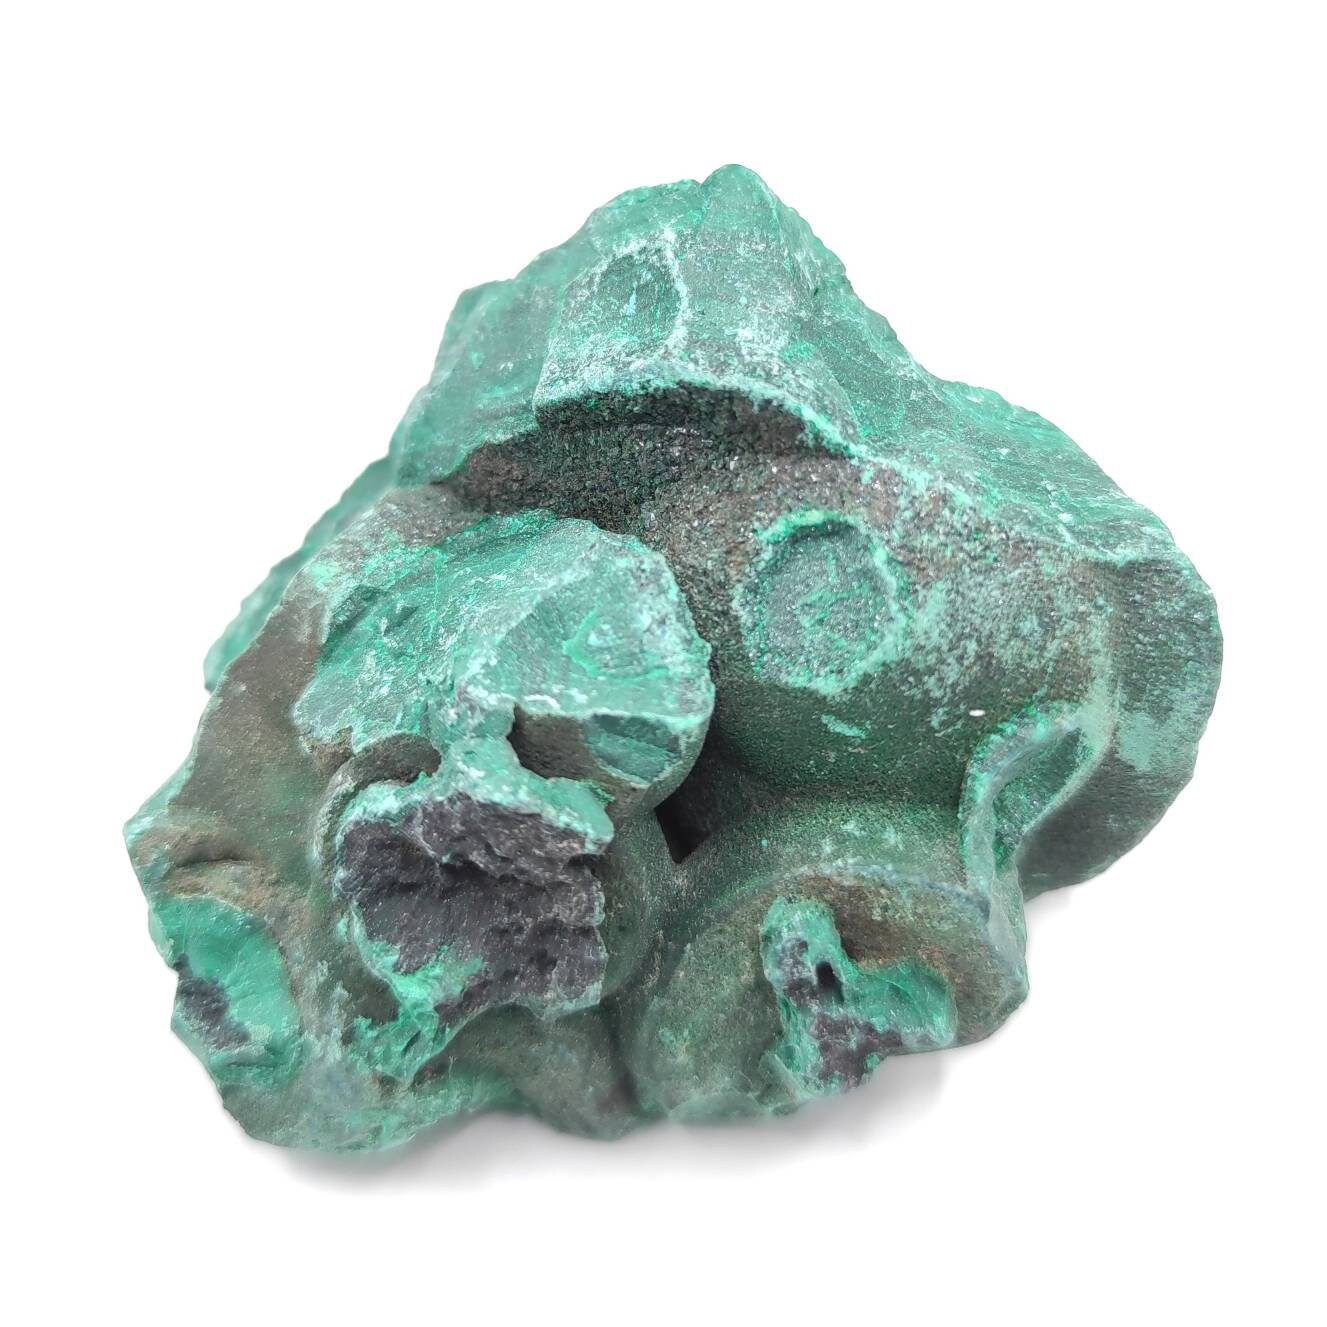 88g Rough Malachite Chunk - Mineral Specimen - Natural Green Crystals - Green Malachite - Natural Raw Crystal Cluster - Unique Specimen